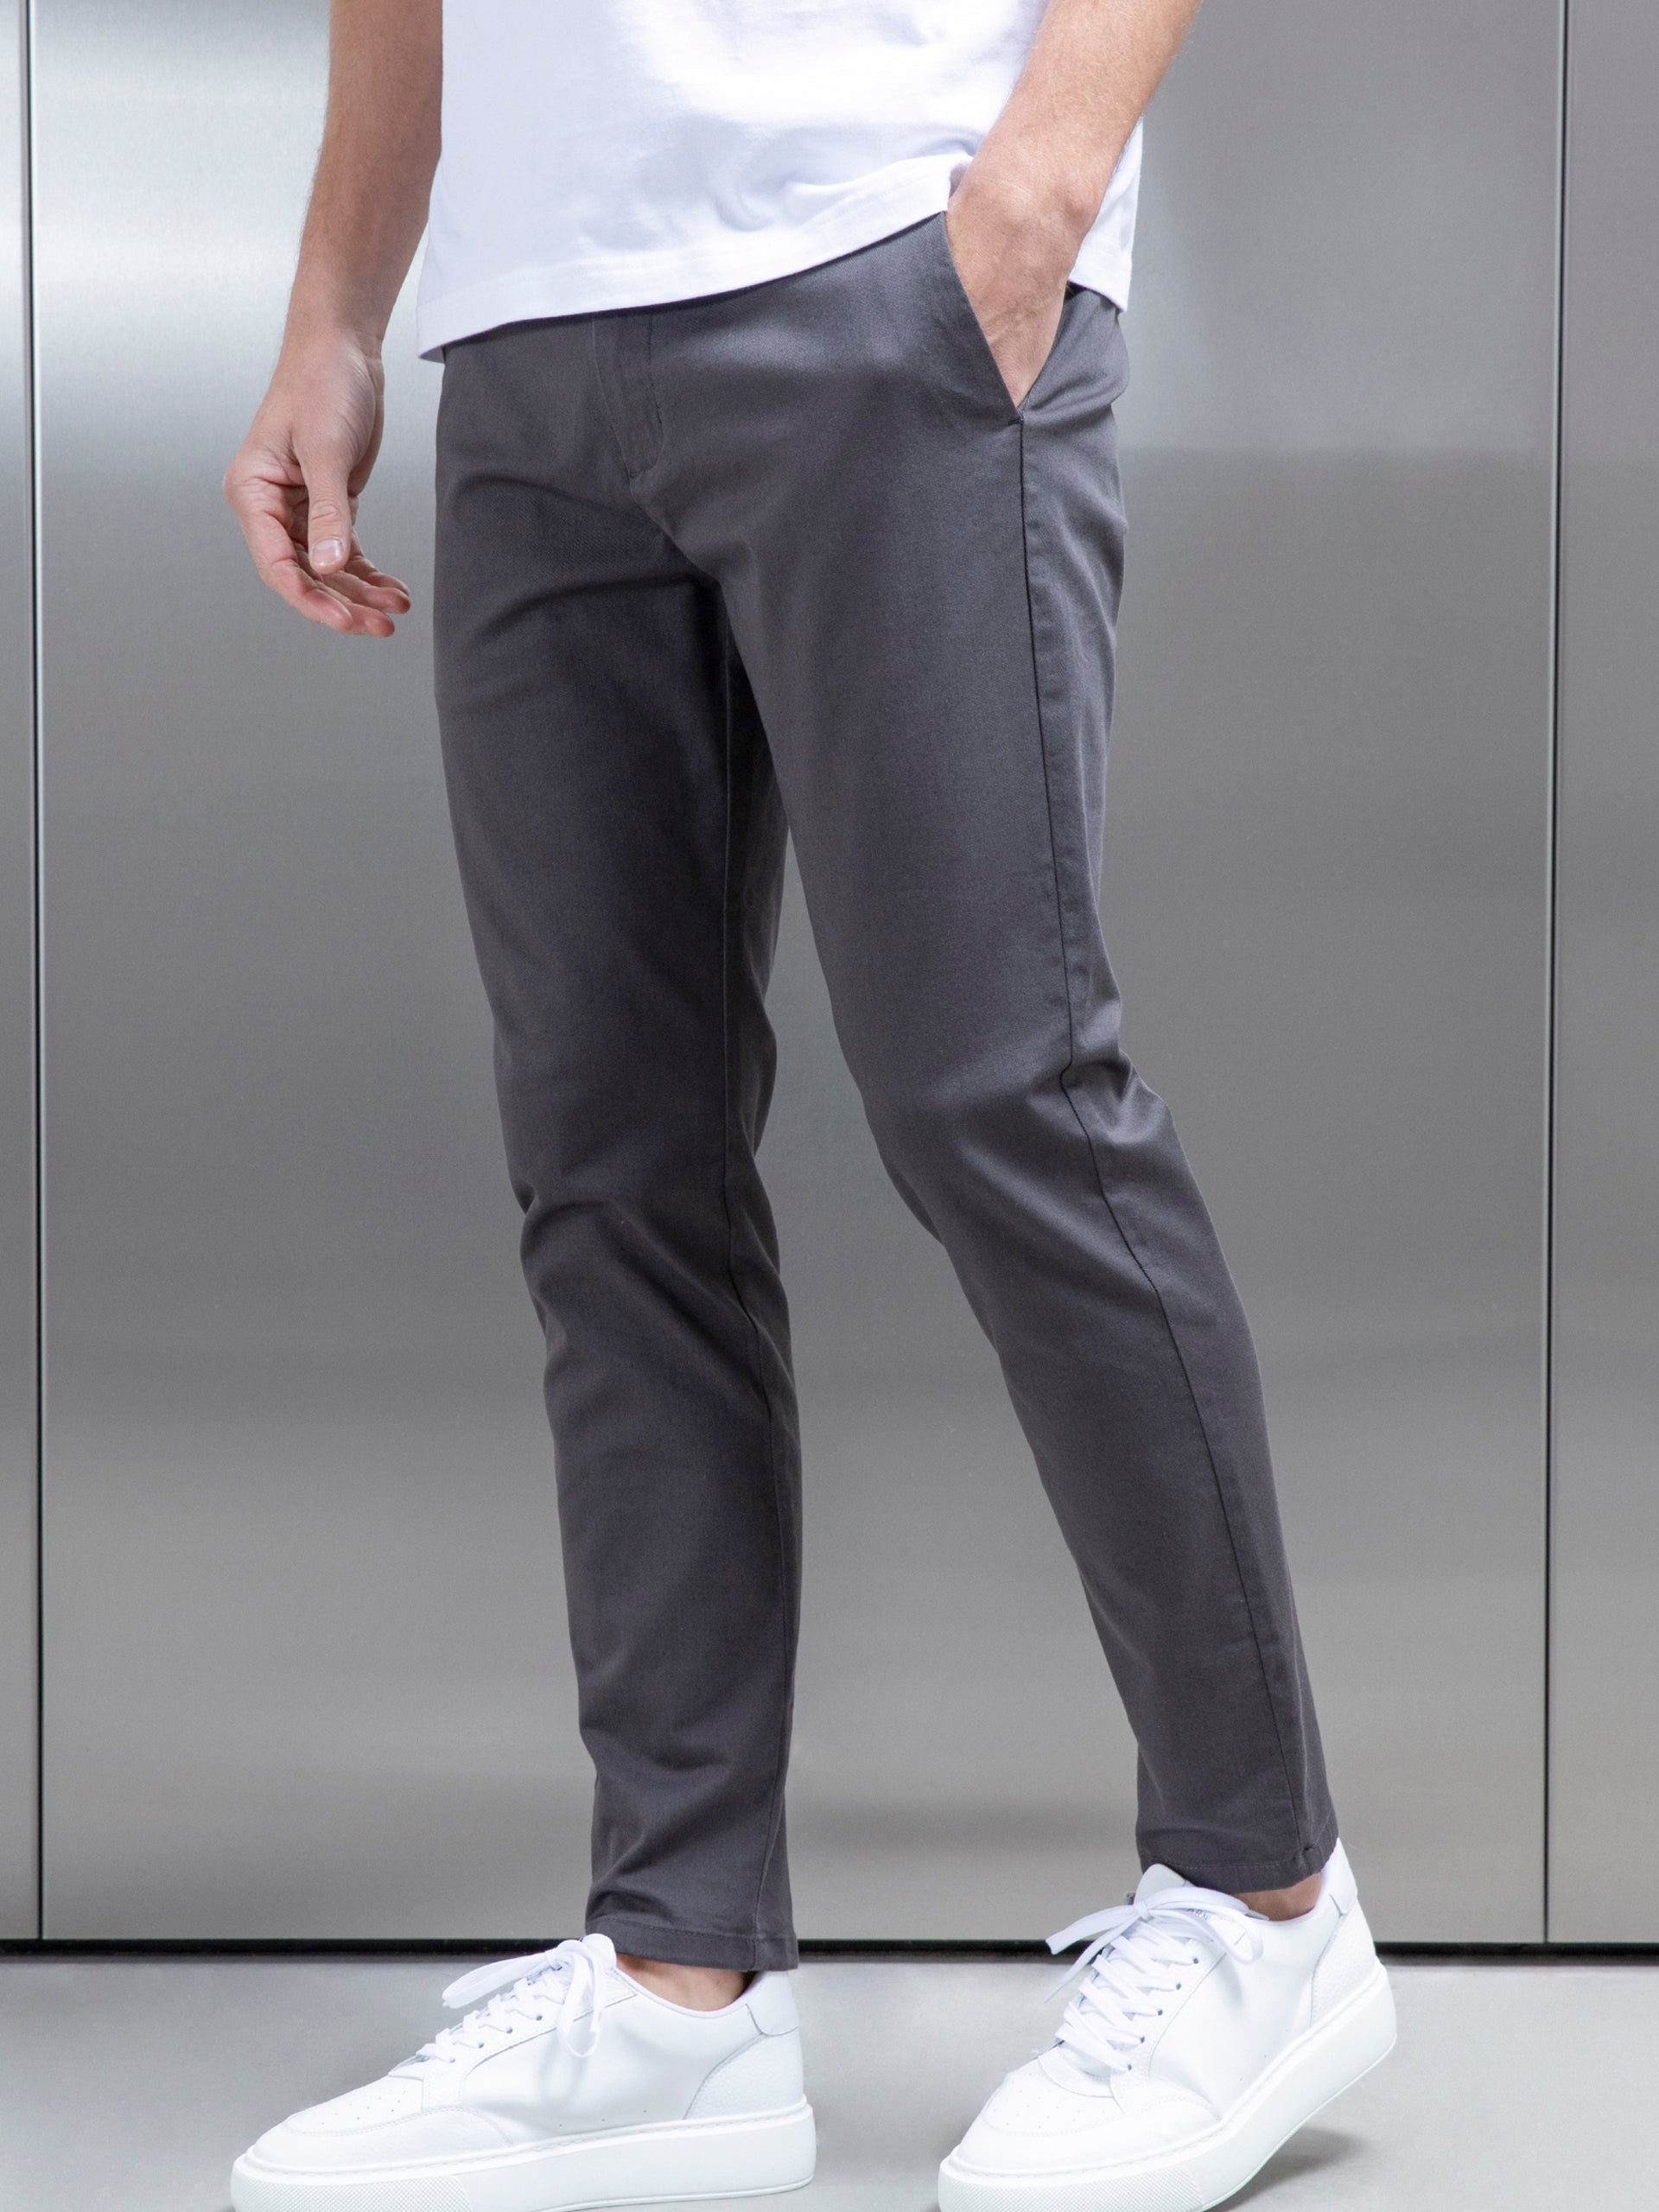 Charcoal Dark Grey Bootleg Cut Trousers Mens Formal Suits Pants Wide